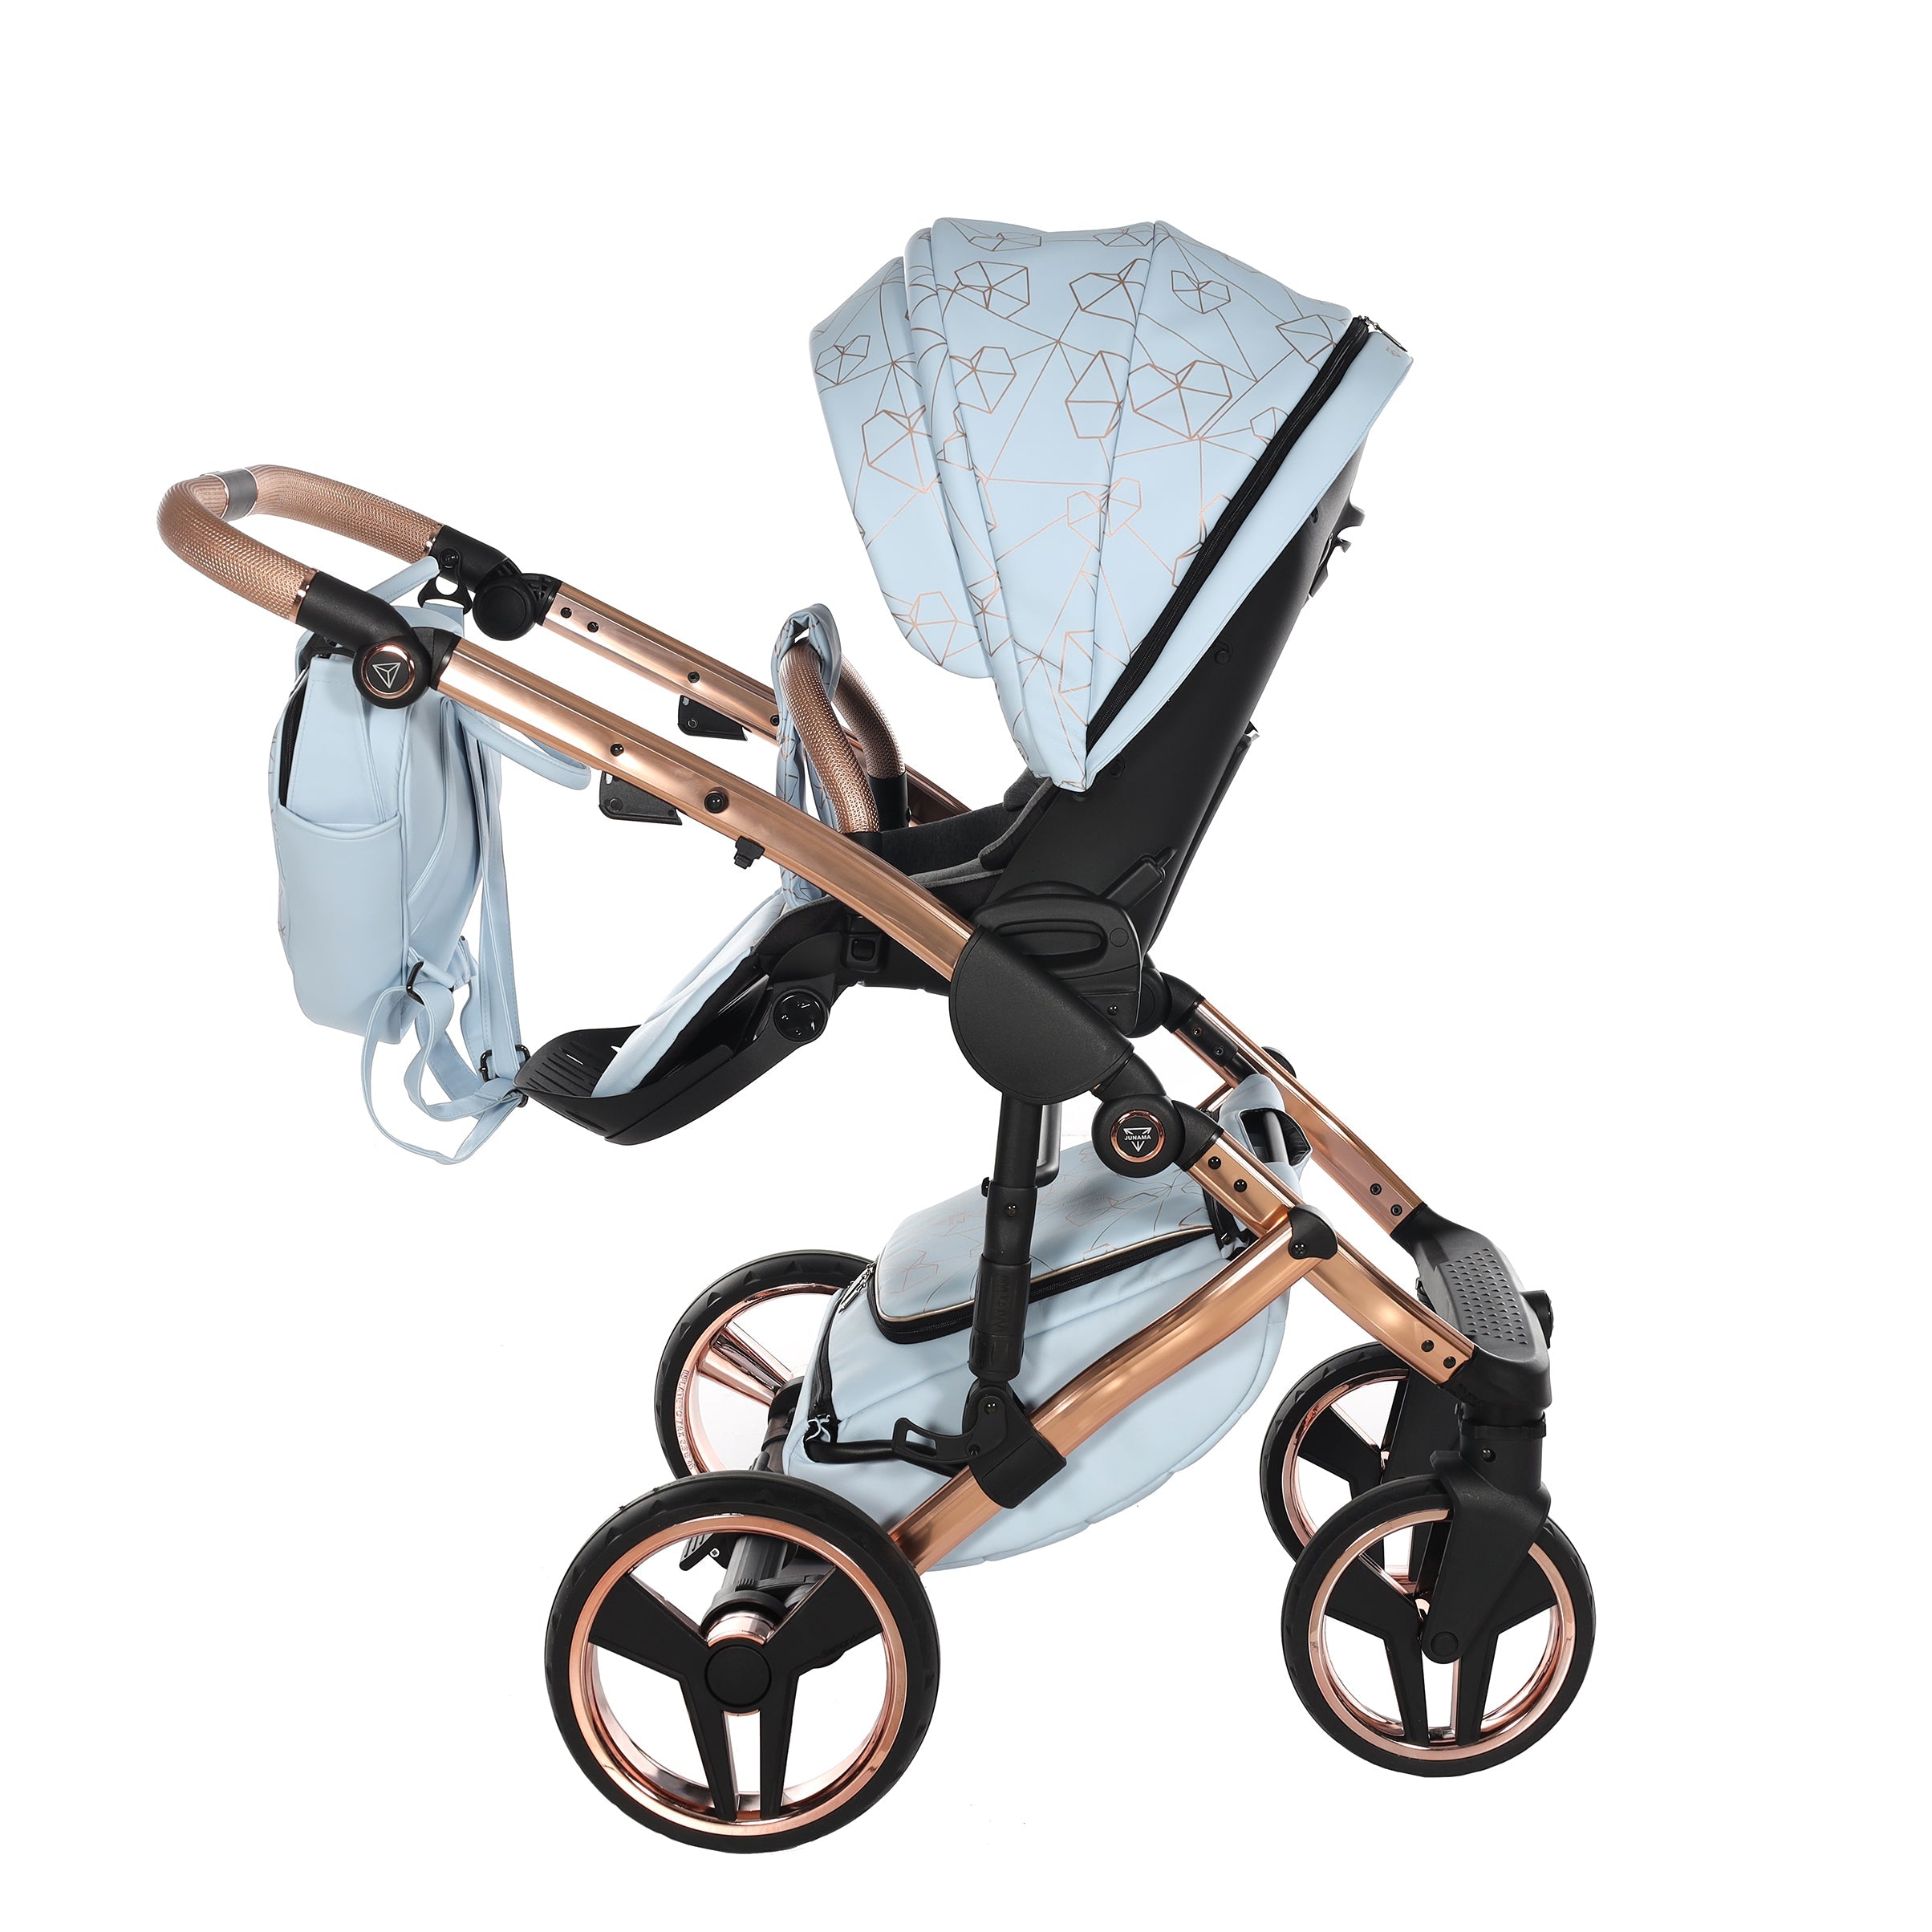 Junama Heart, baby prams or stroller 2 in 1 - Blue and Copper, Code number: JUNHERT05